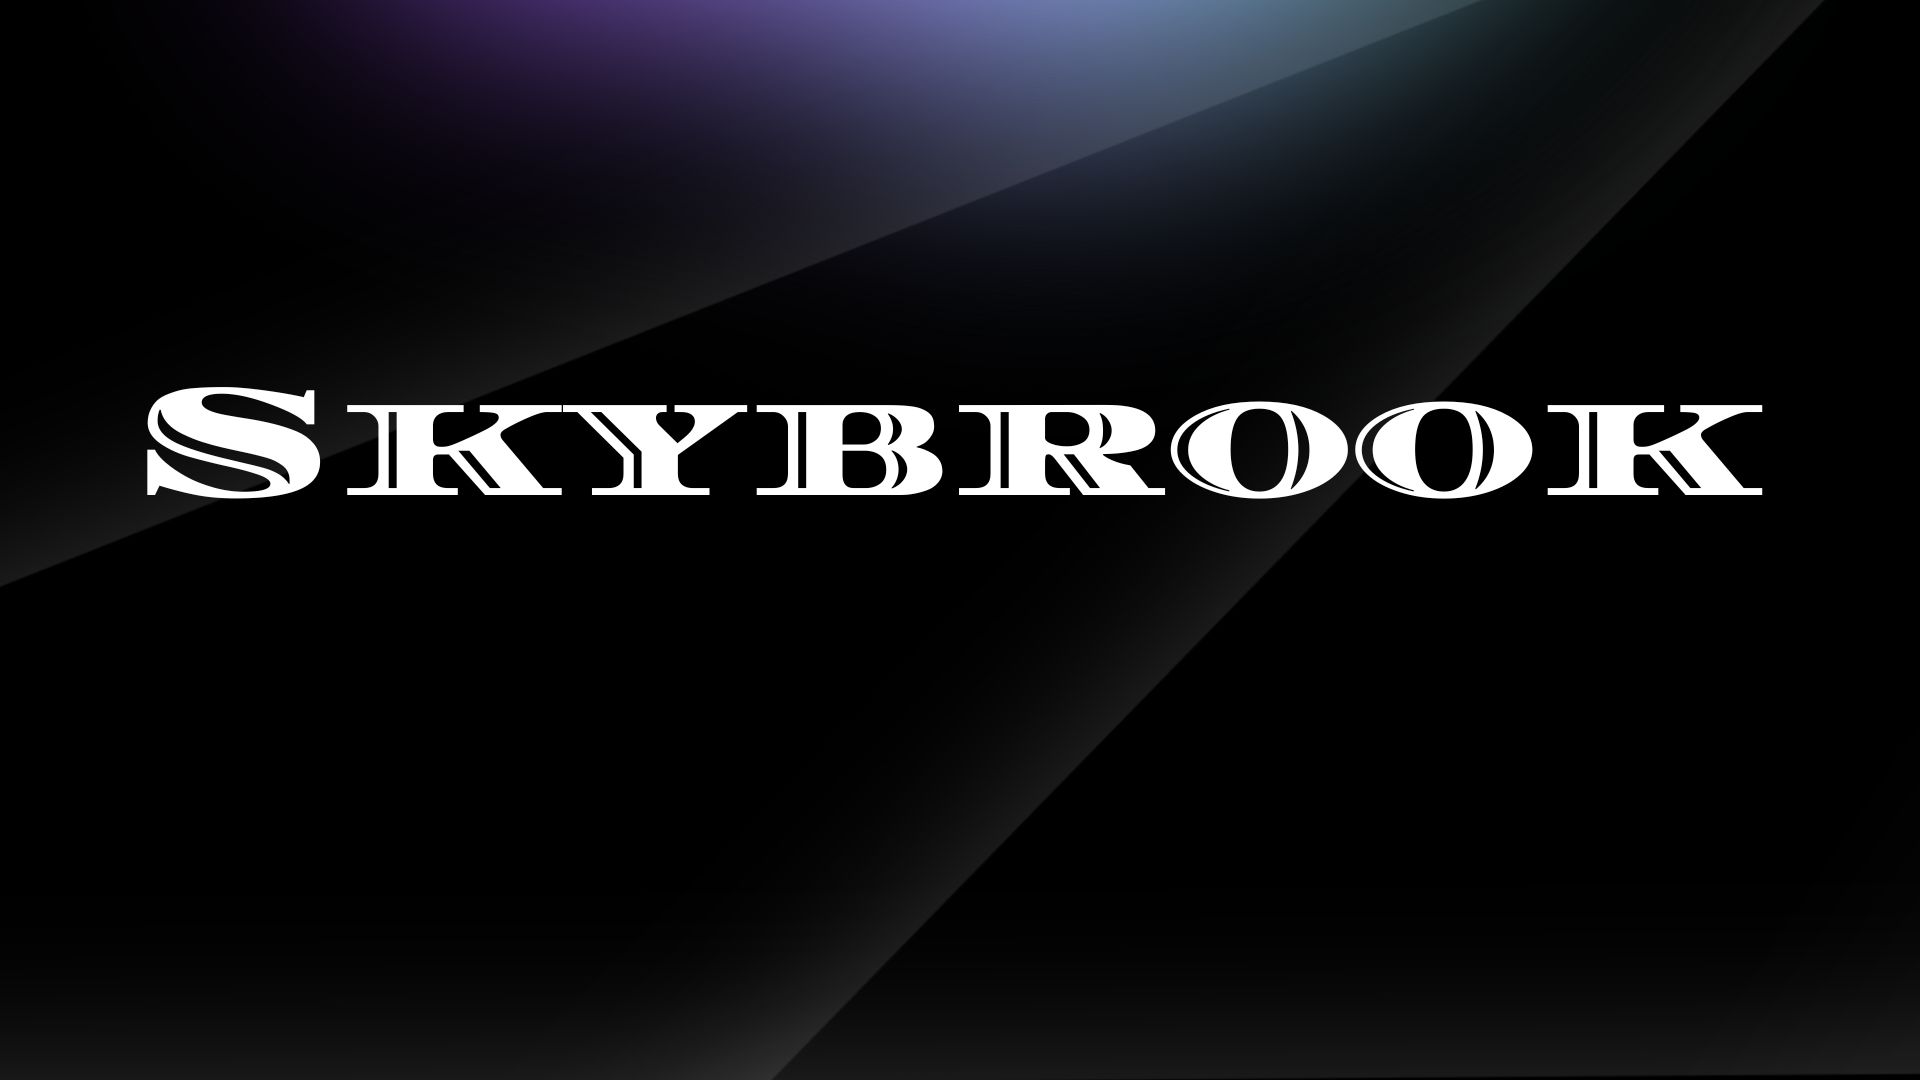 Skybrook #365/1000